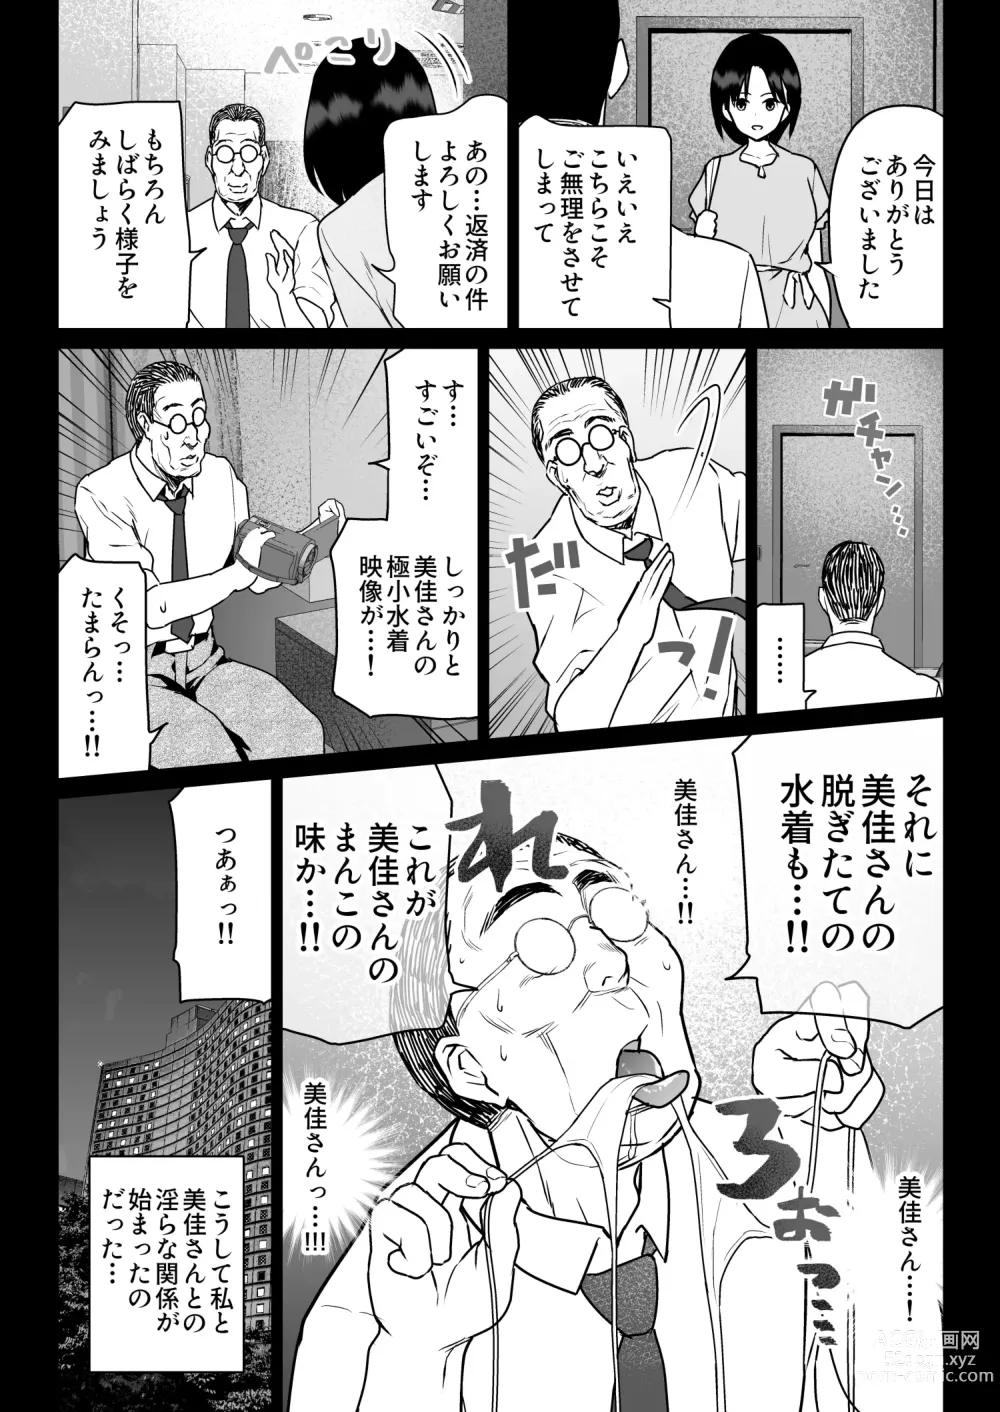 Page 12 of doujinshi Oshidori Fuufu Yakitorare